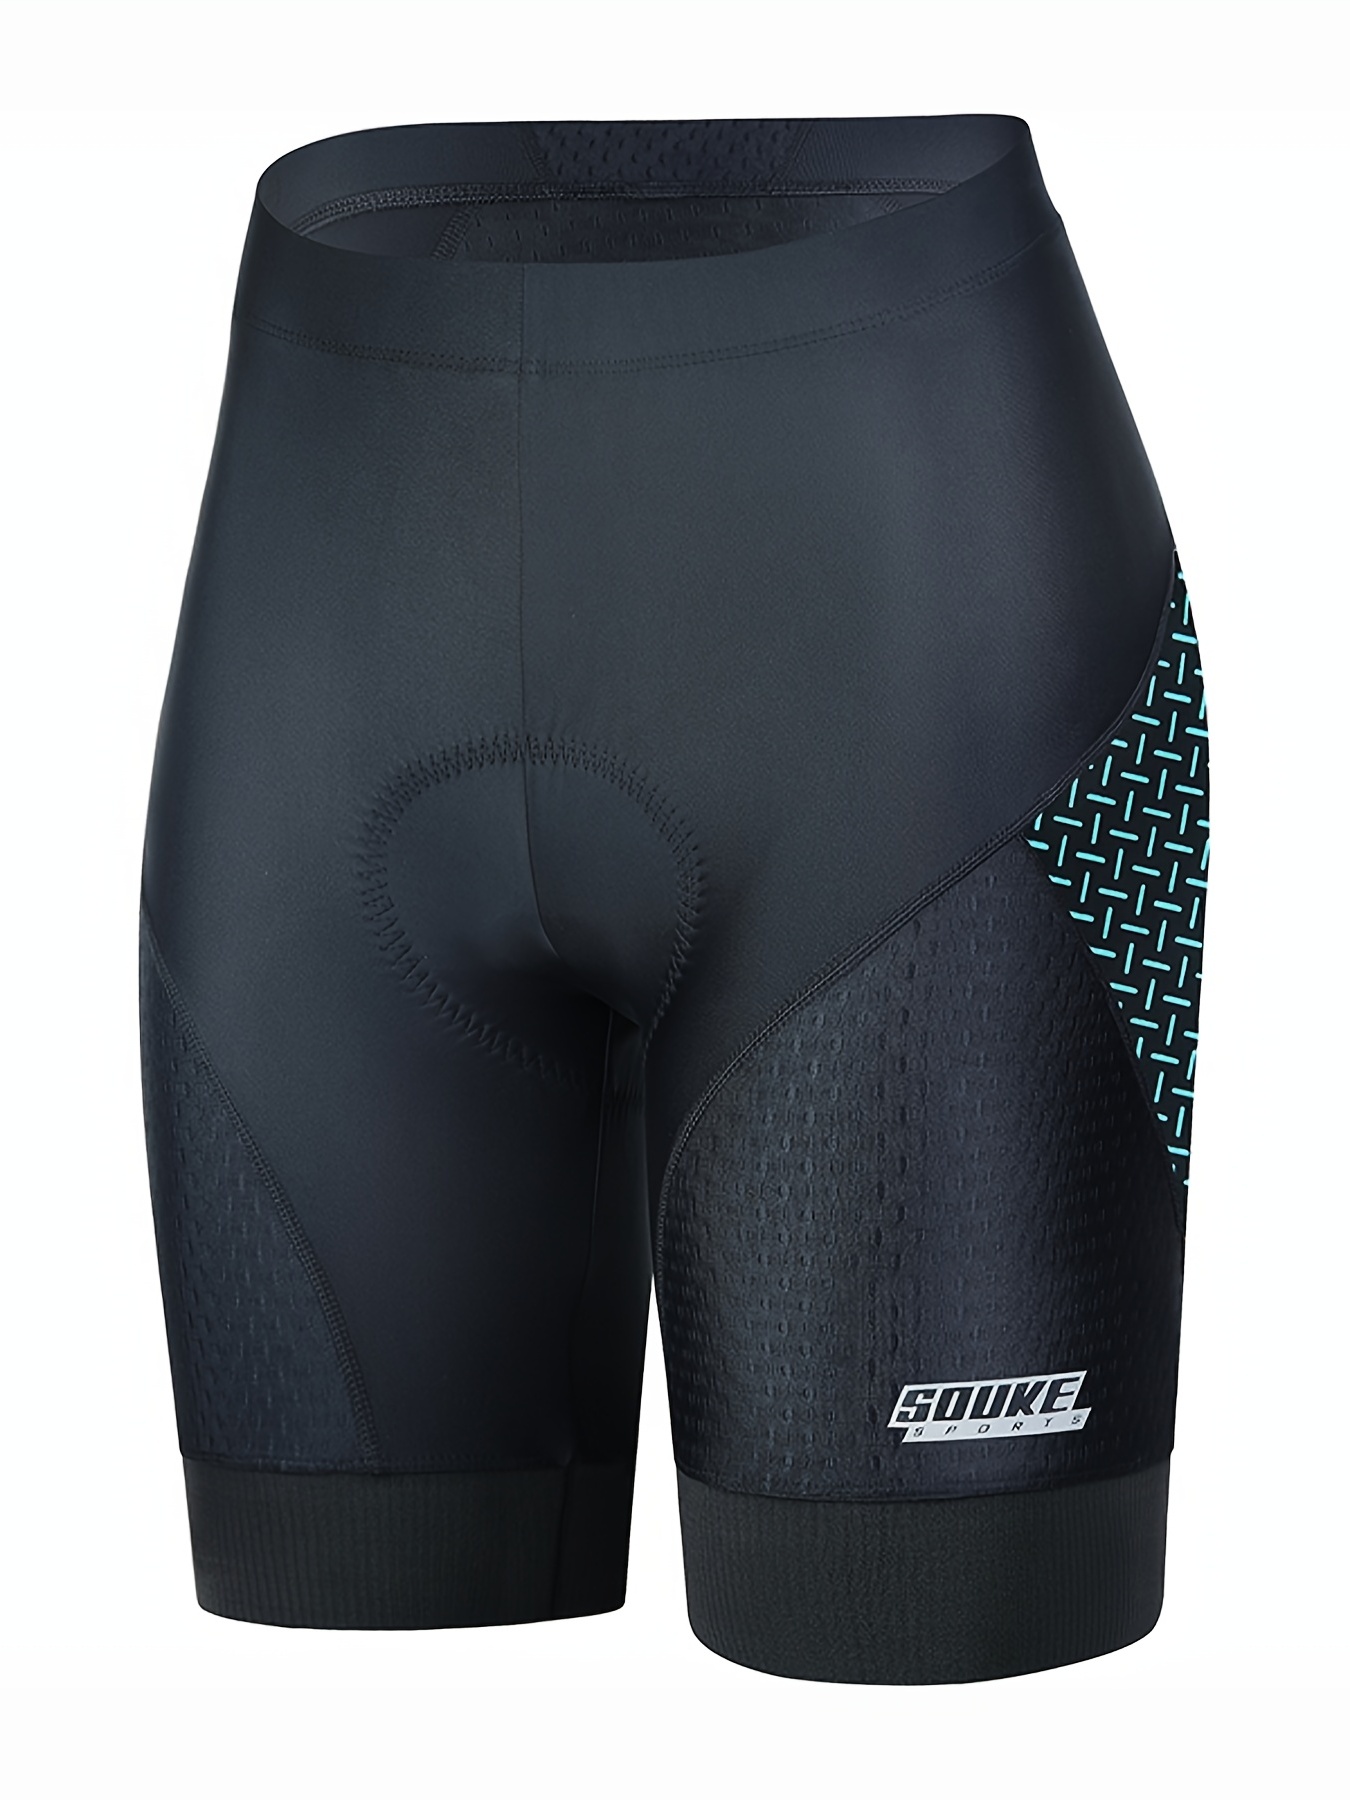  Souke Sports Mens Cycling Underwear Shorts 4D Padded Bike  Bicycle MTB Liner Shorts